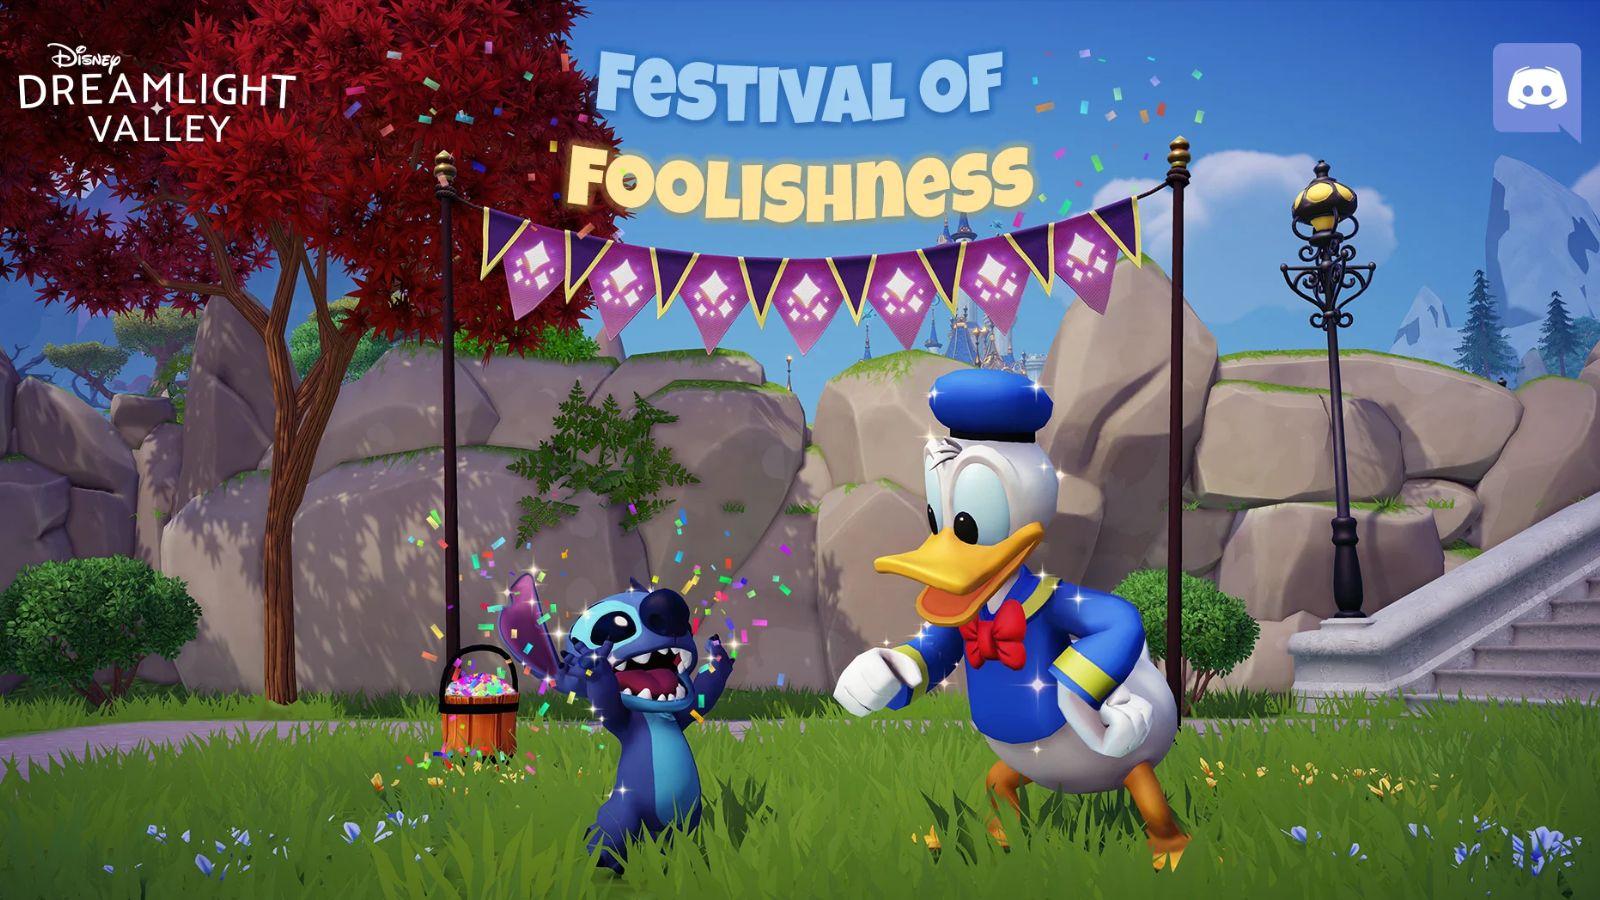 Disney Dreamlight Valley festival of foolishness